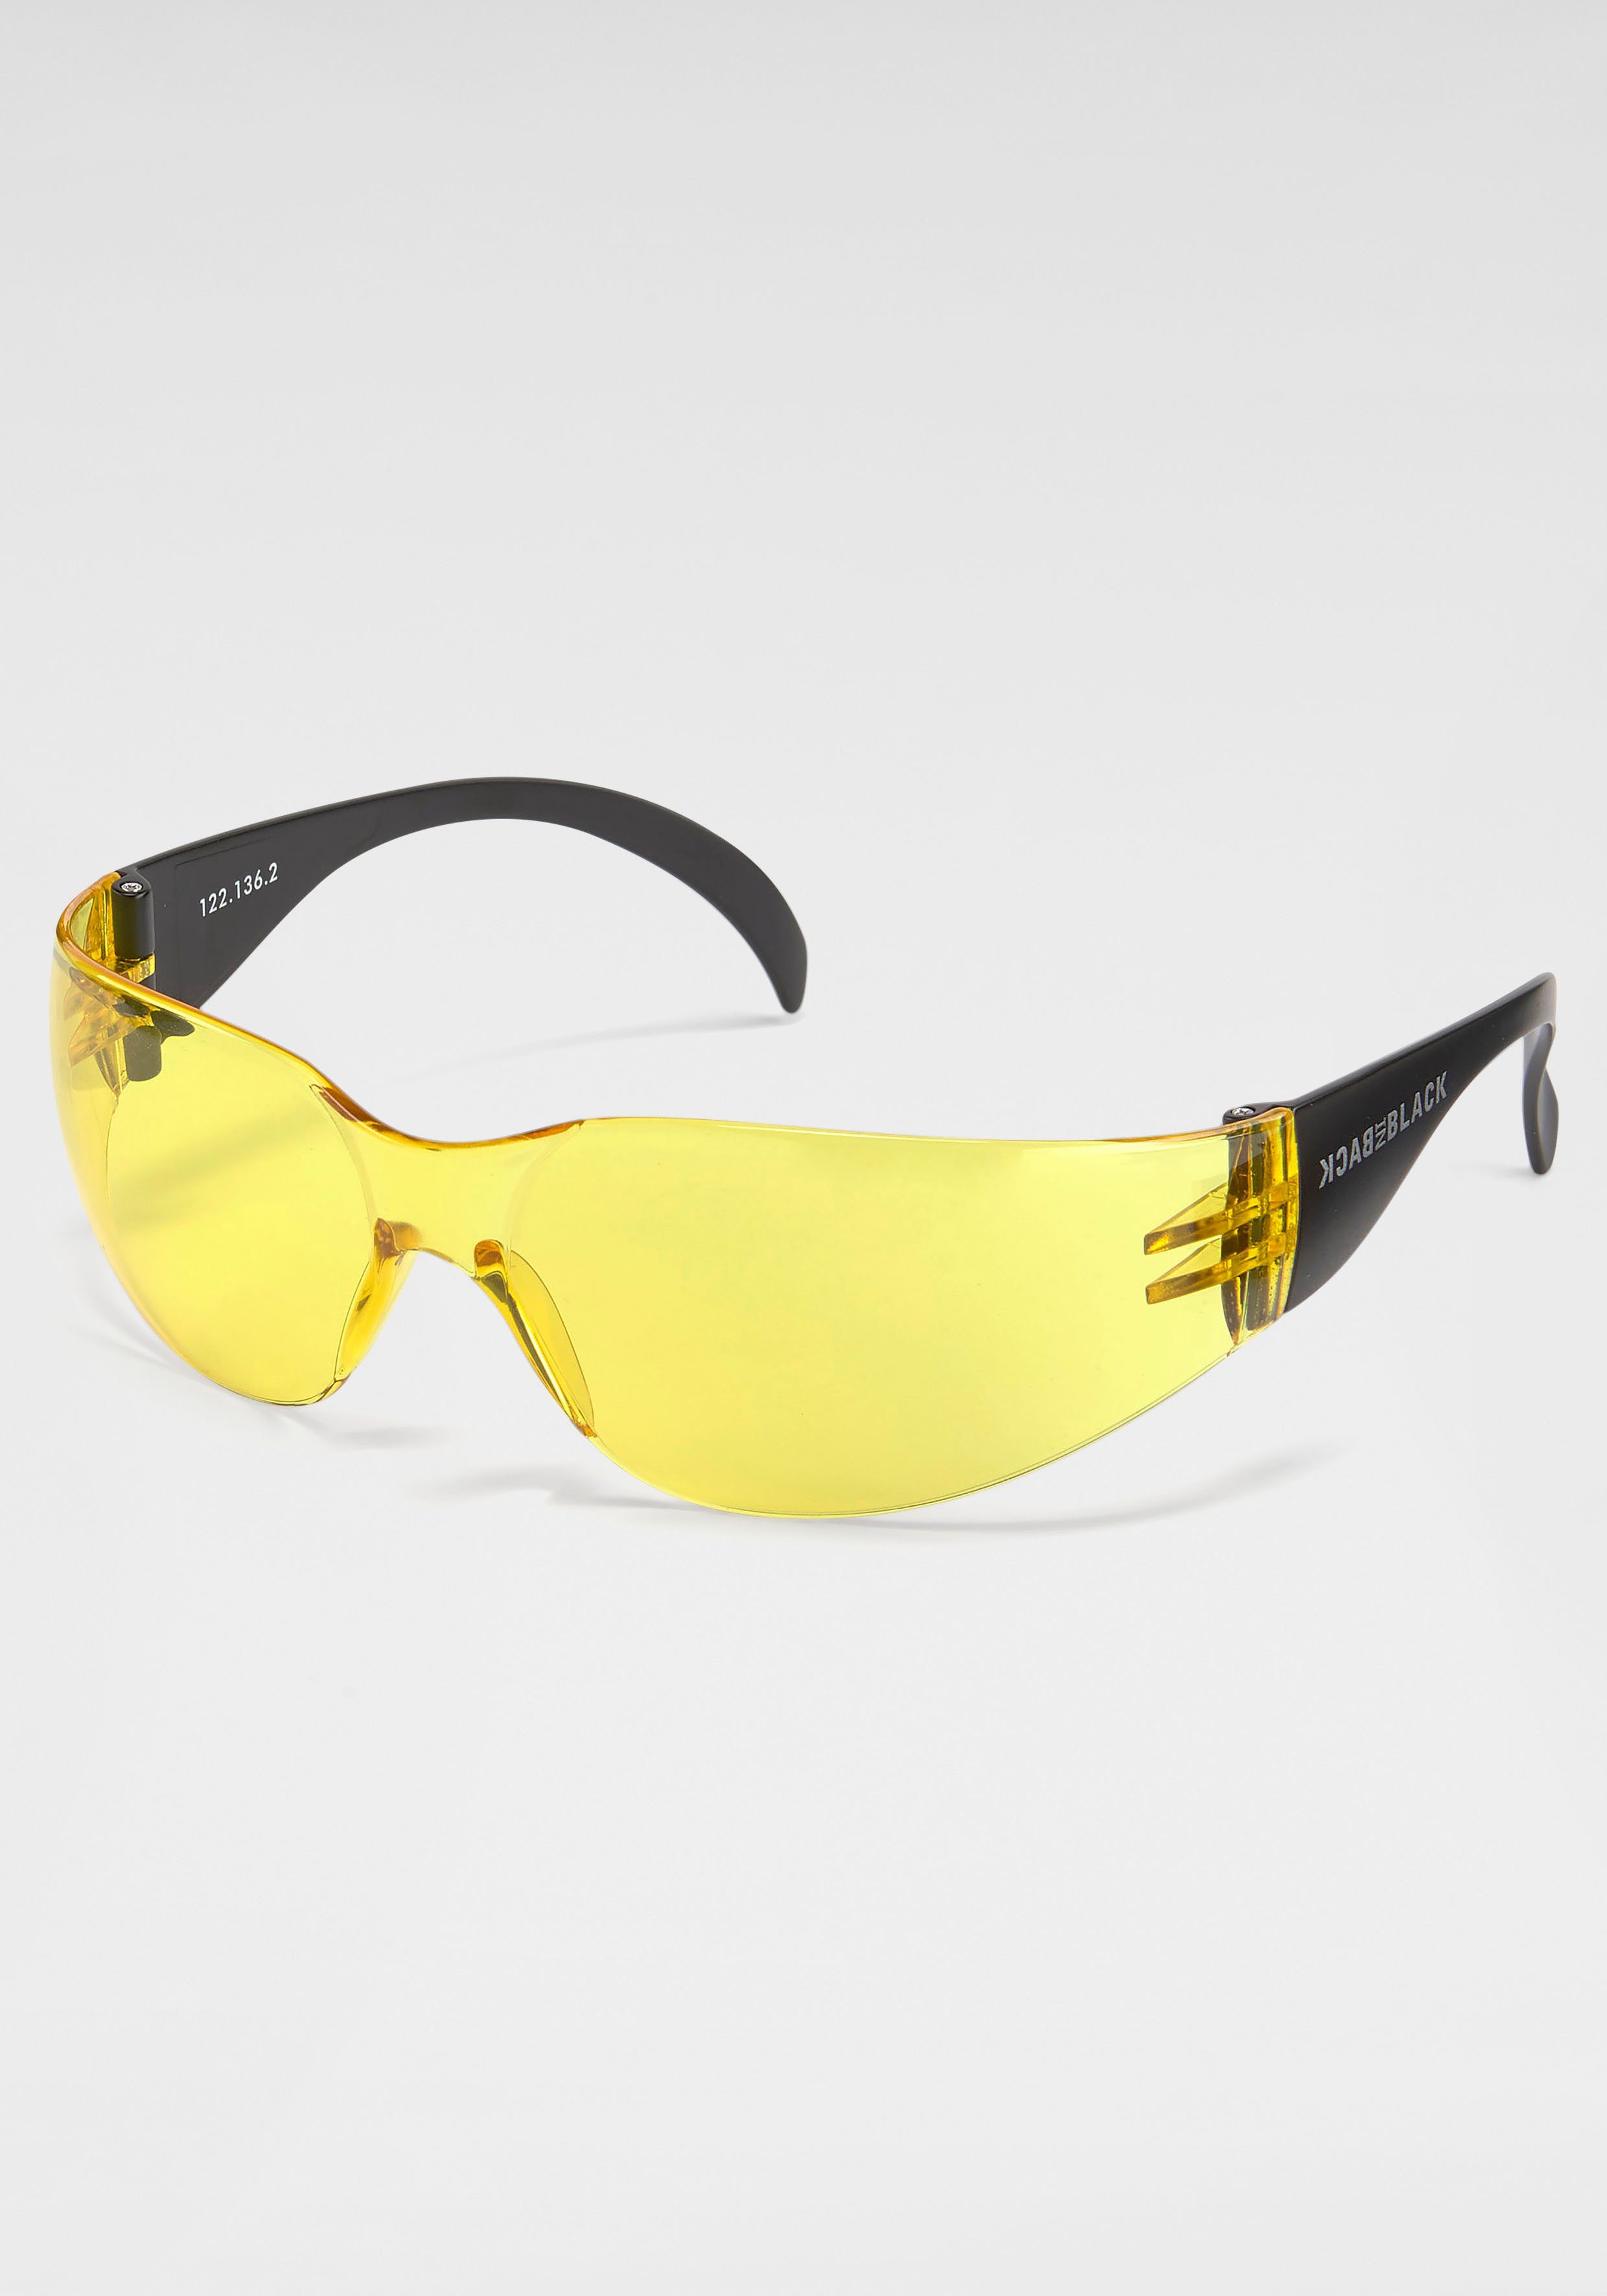 BACK IN BLACK Sonnenbrille gelb Randlos Eyewear